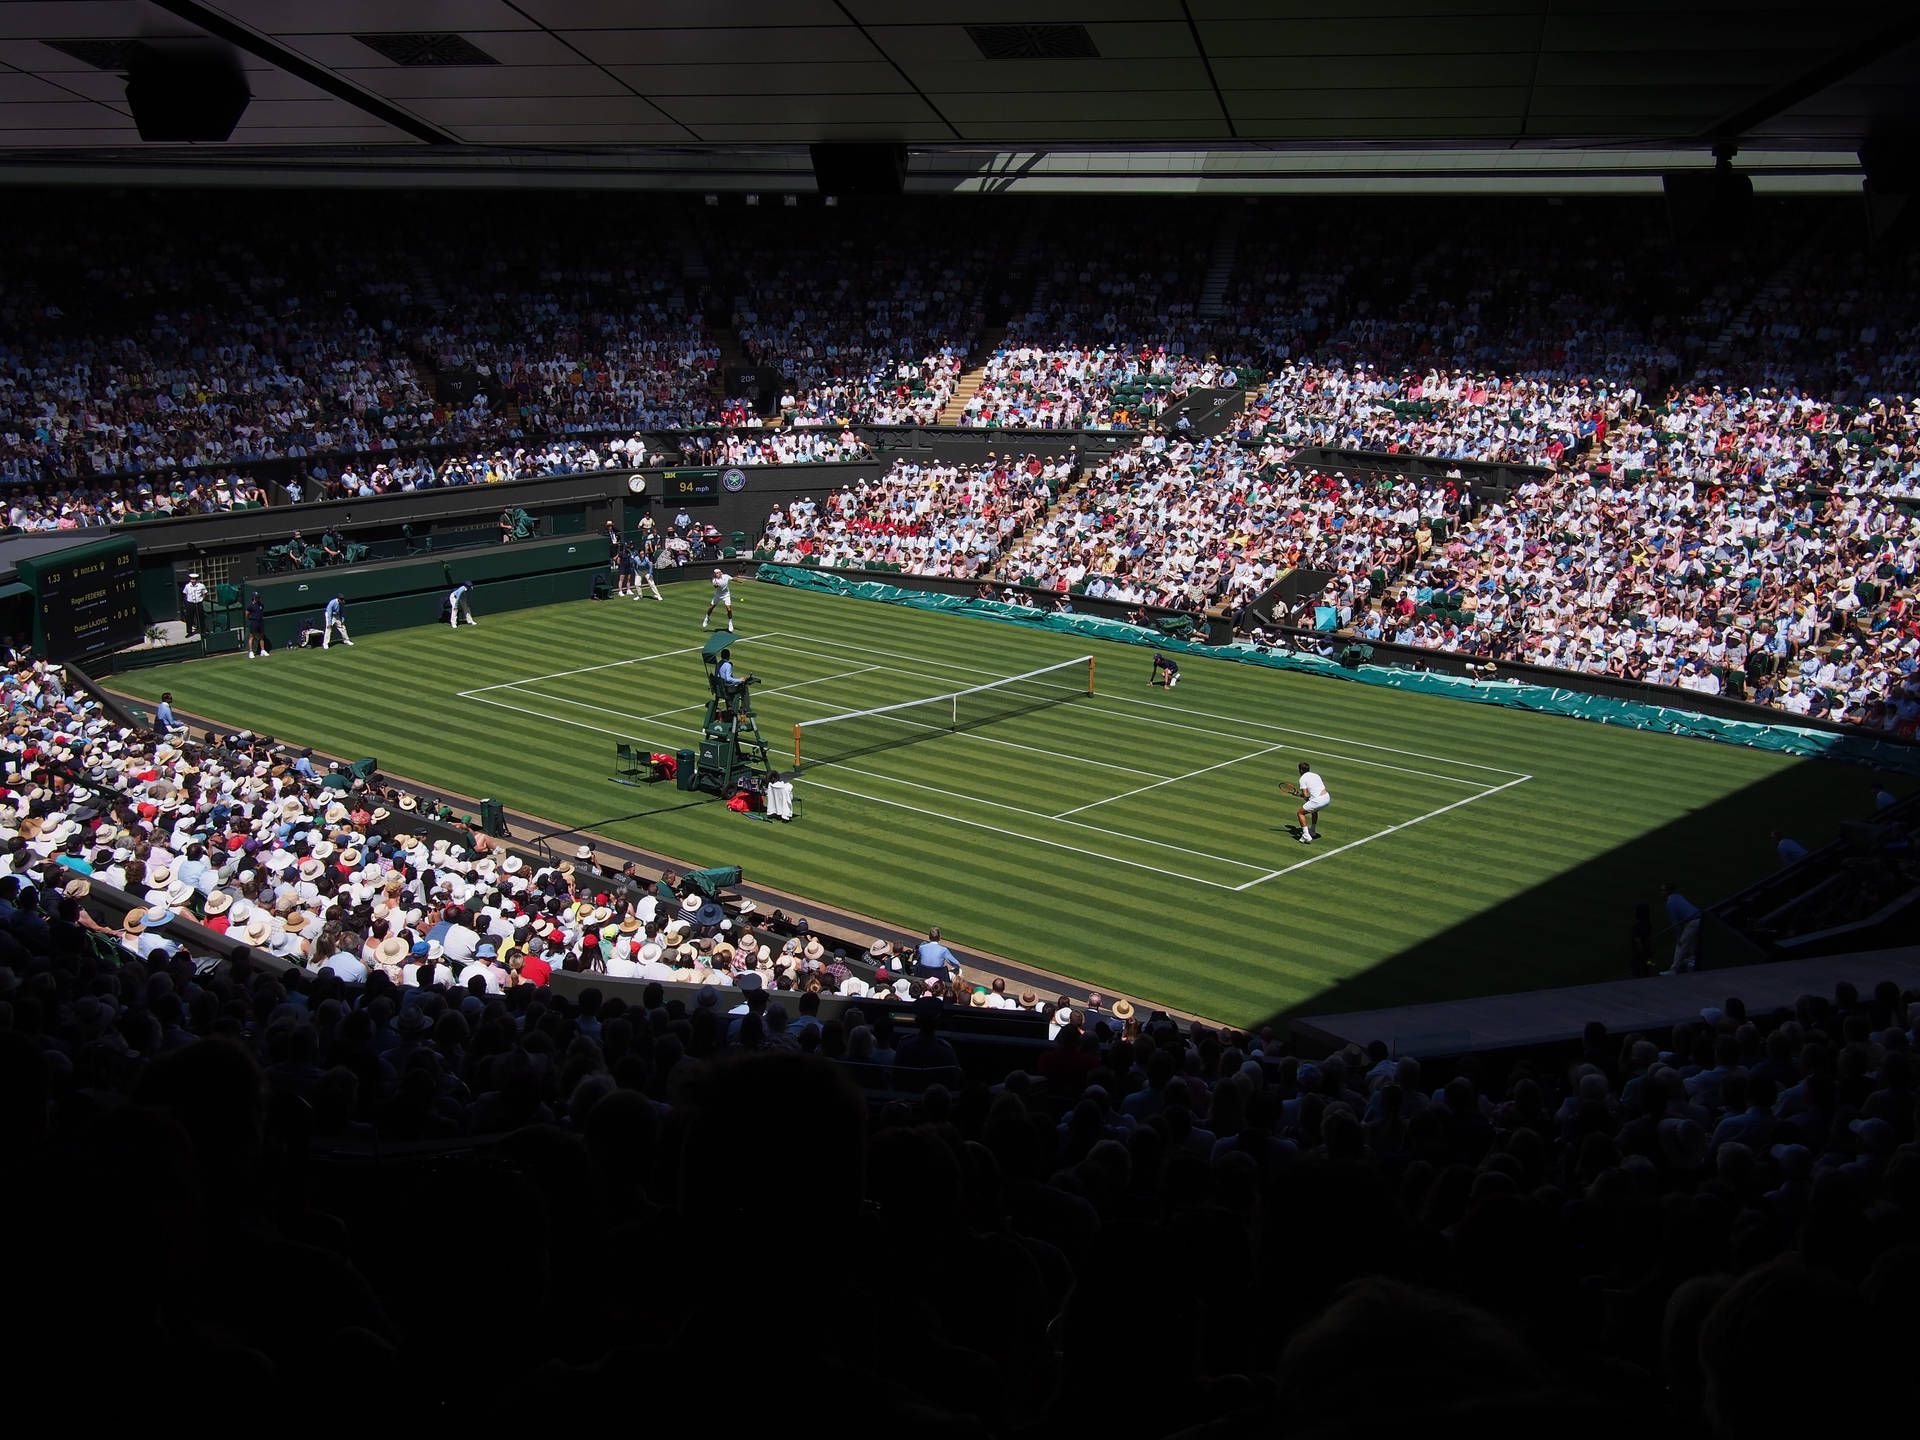 Caption: Splendid View Of The Iconic Wimbledon Tennis Court